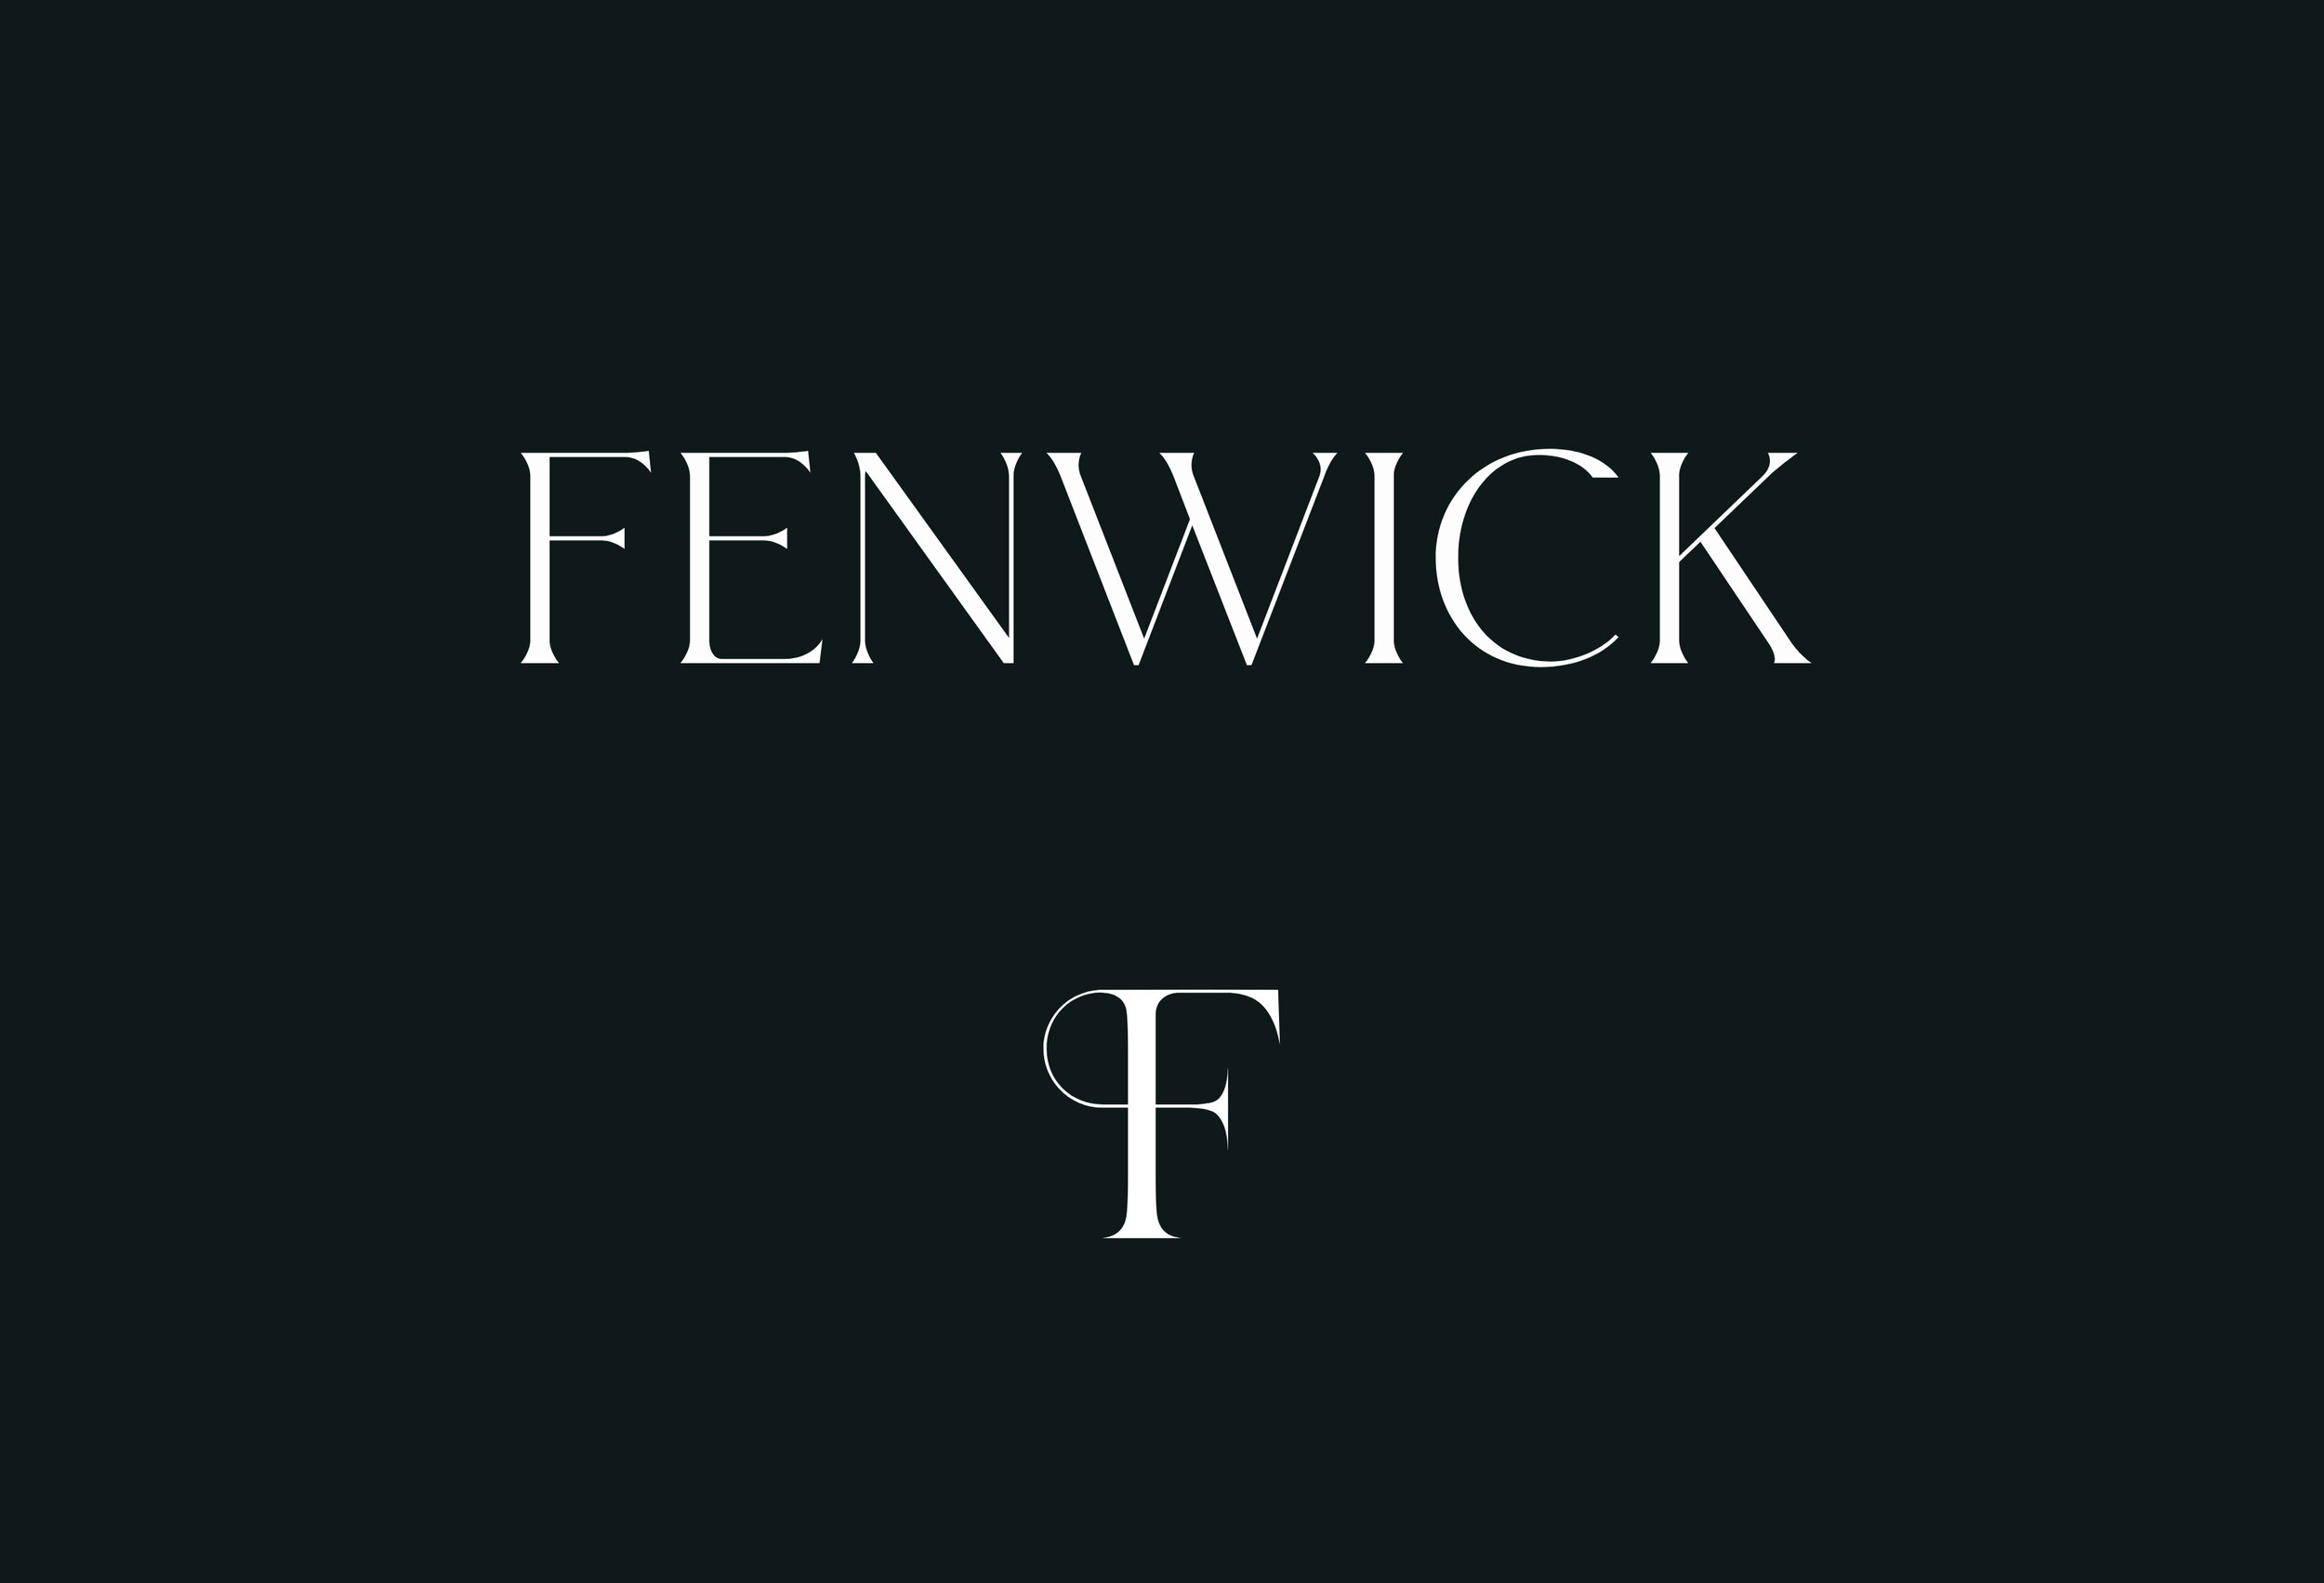 Fenwick's Evolution — Fenwick